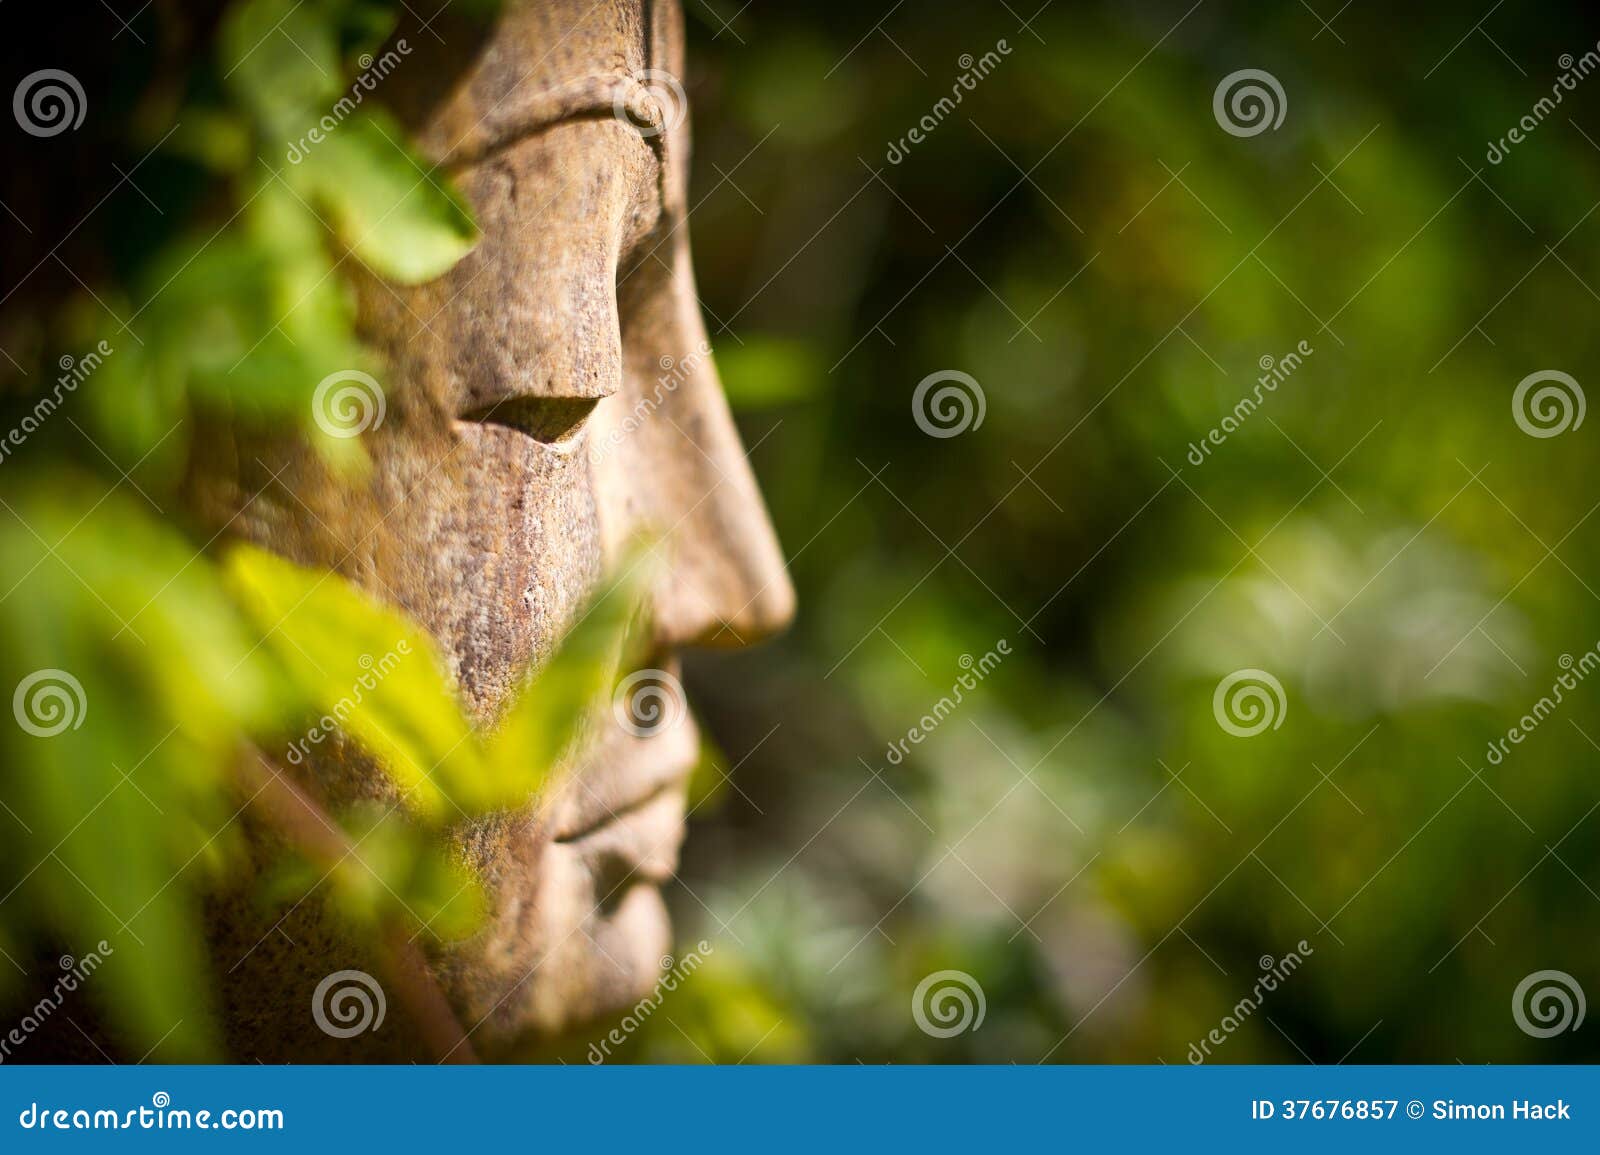 buddha face in a garden